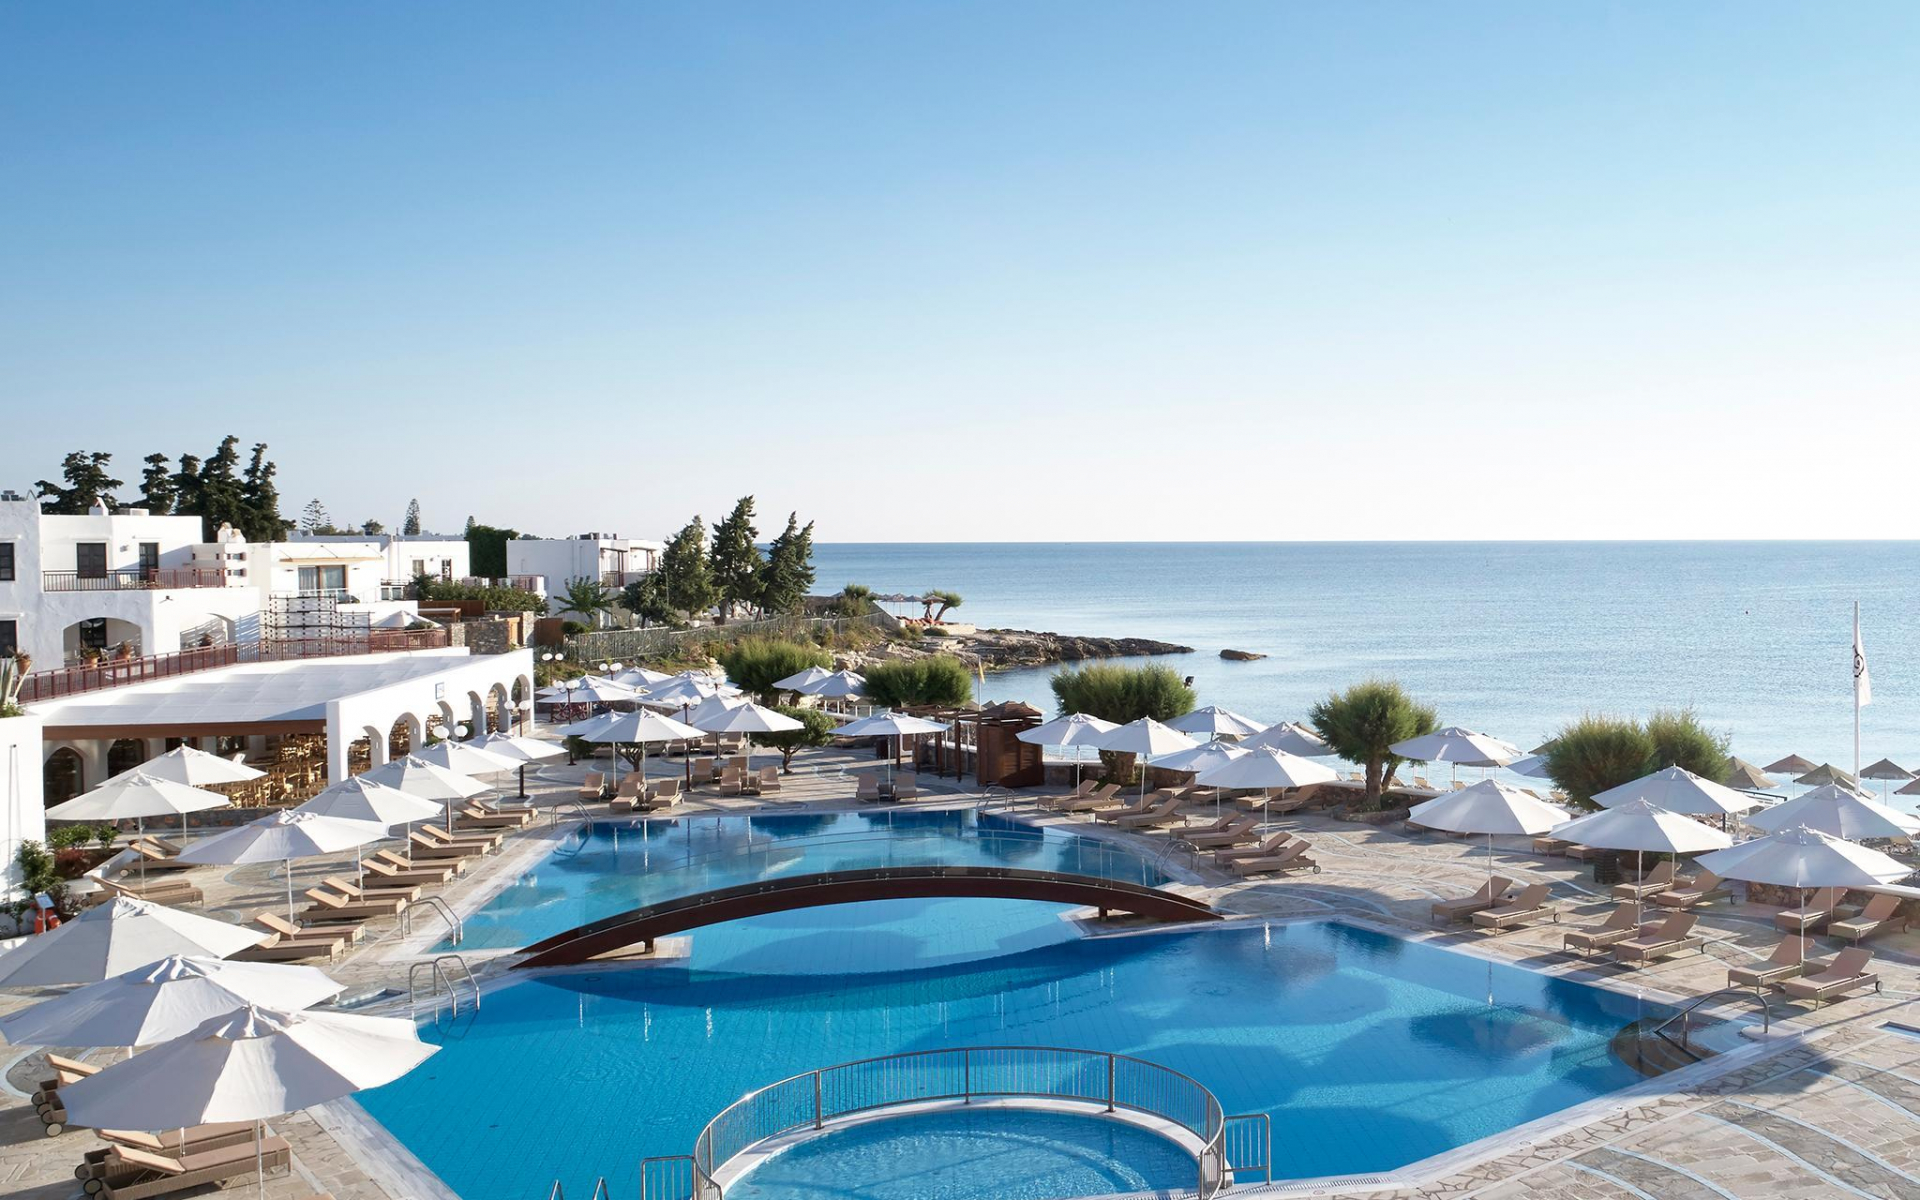 Creta Maris Beach Resort Hersonissos Crete